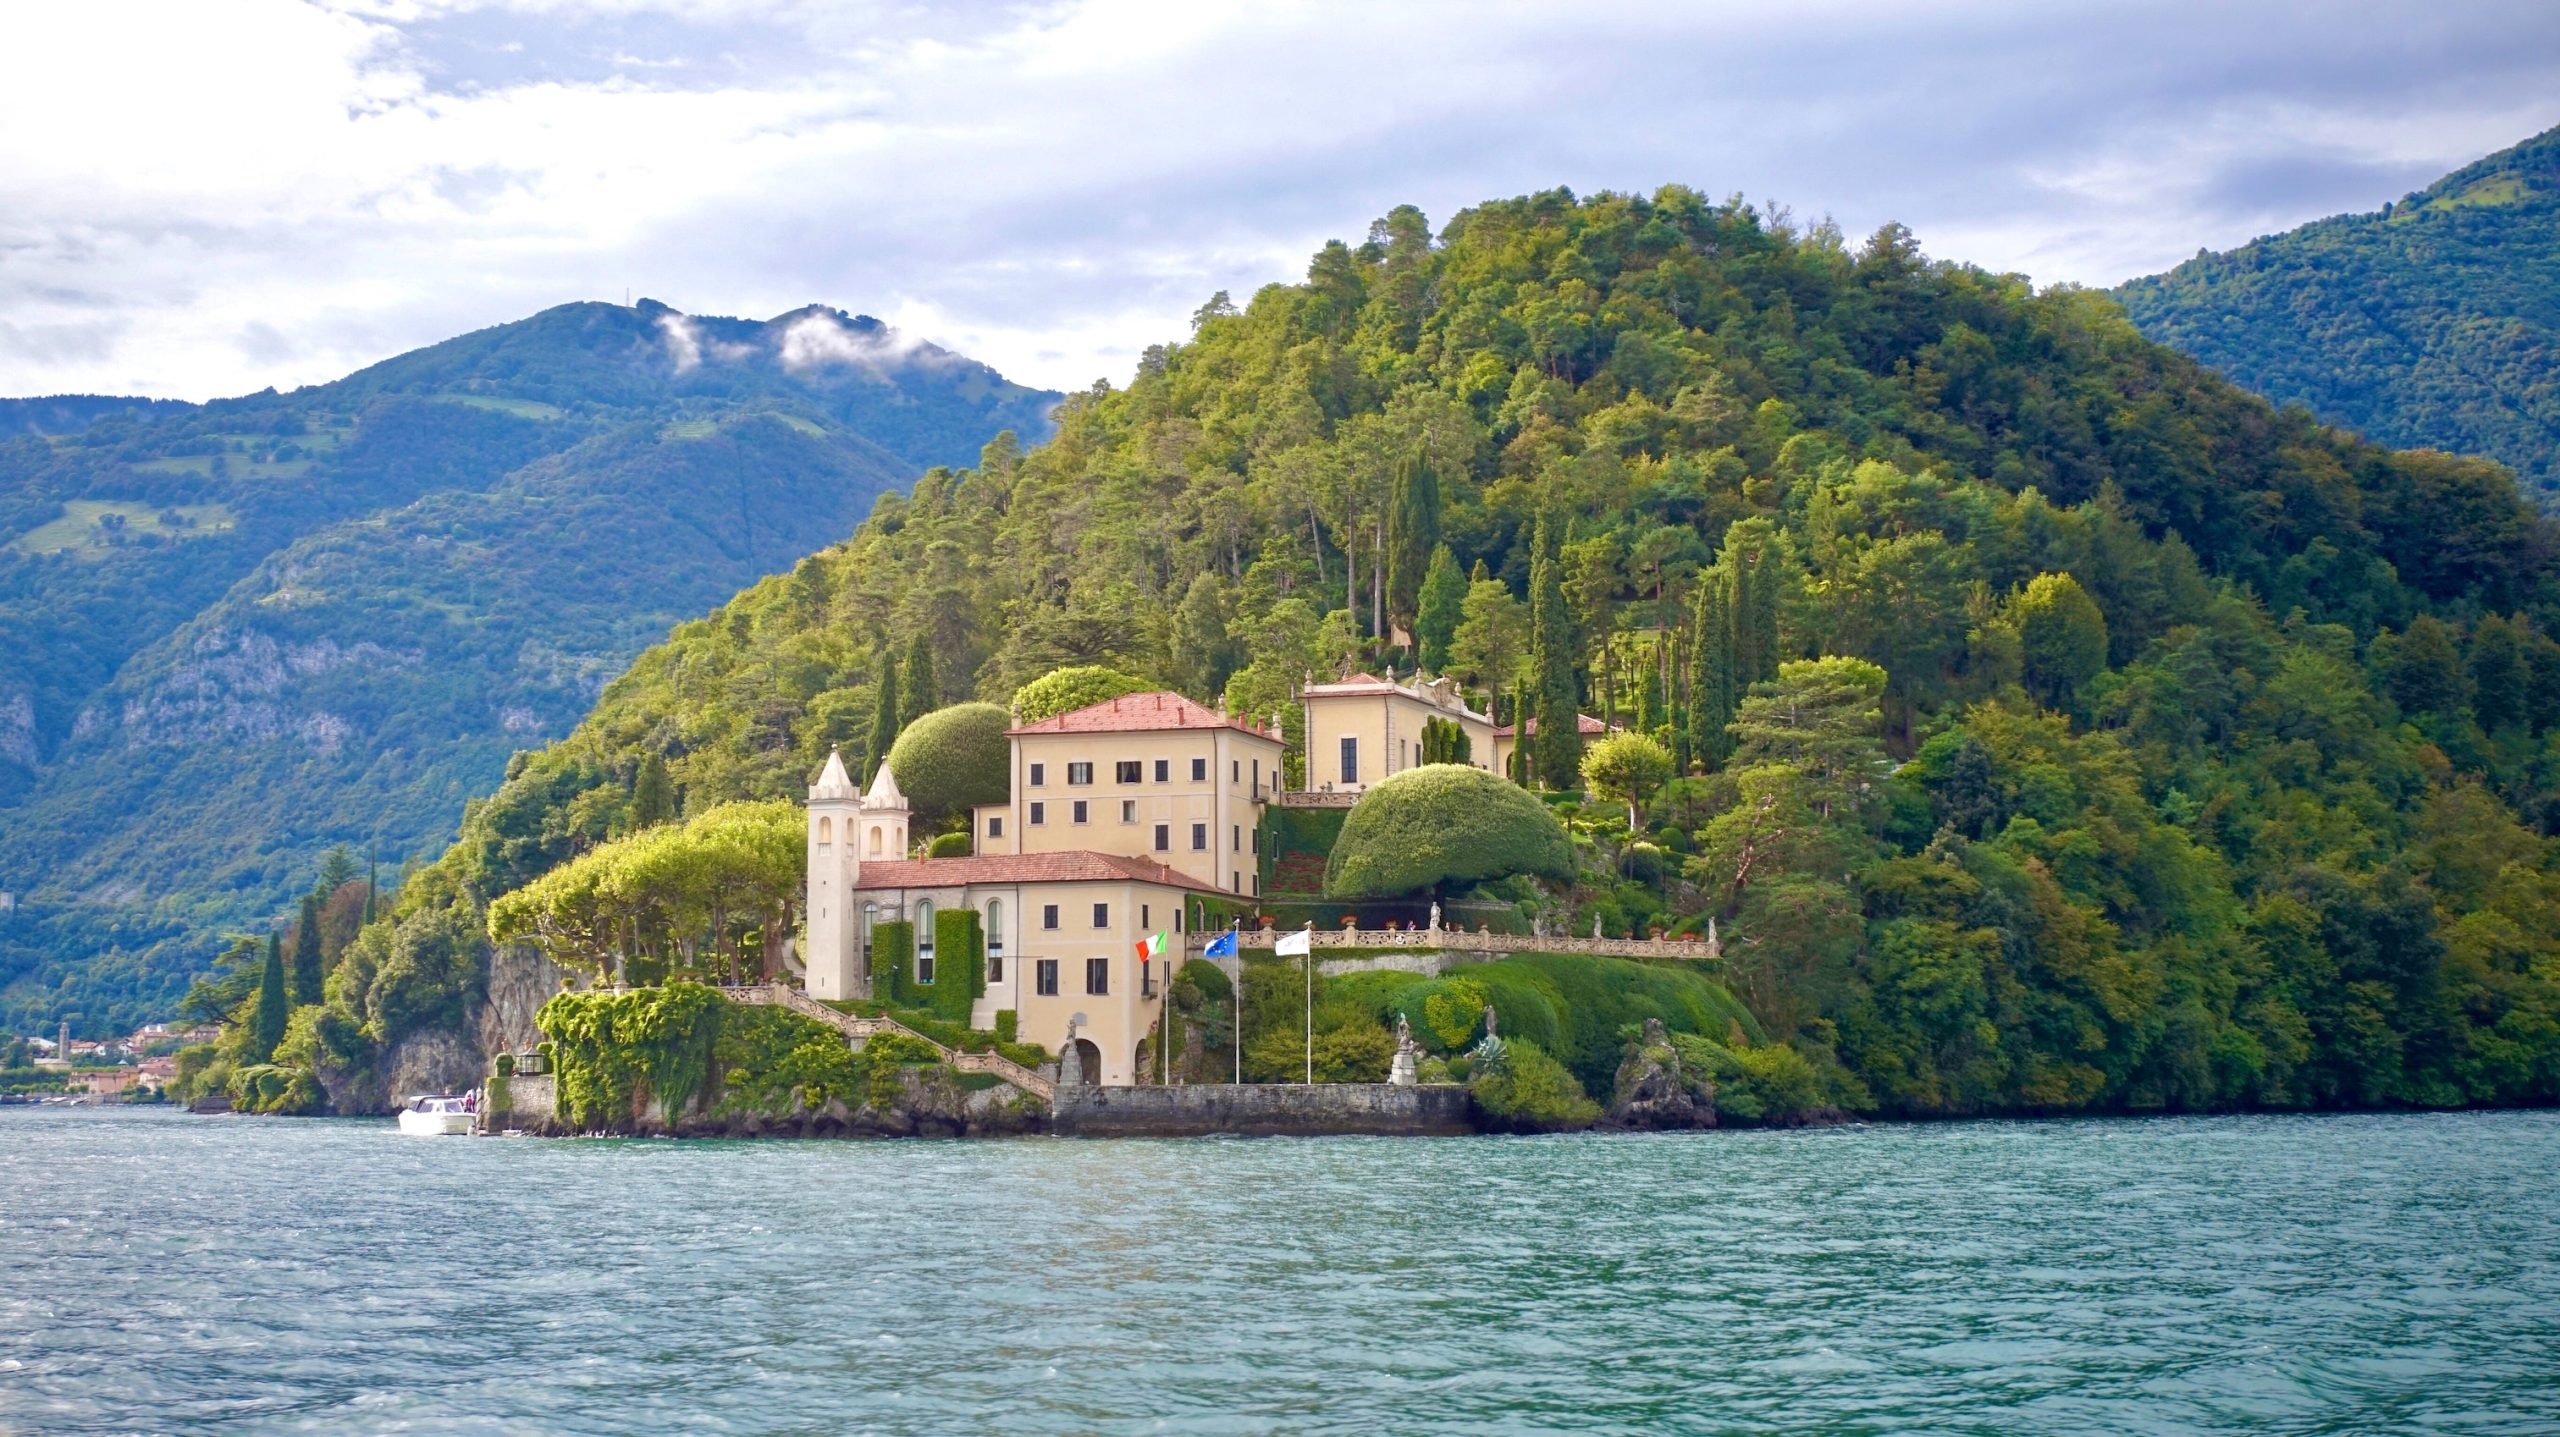 Car vacations – a trip to Lake Como!